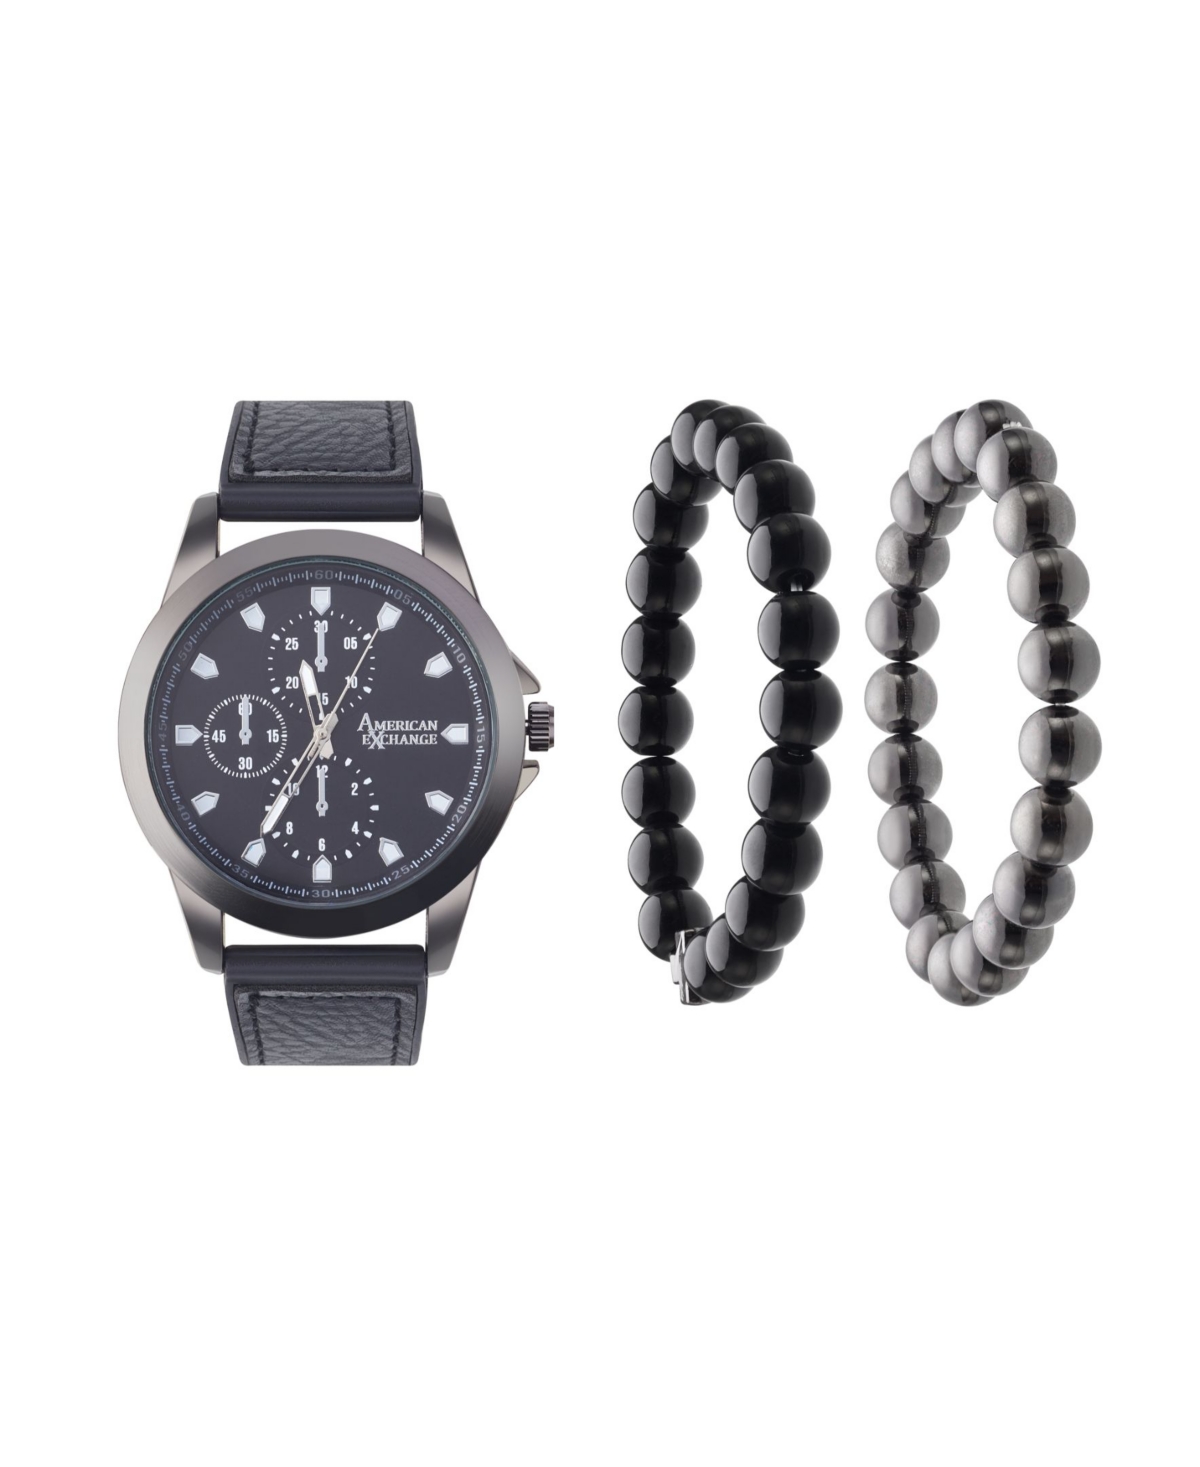 Men's Quartz Movement Black Leather Analog Watch, 47mm and Stackable Bracelet Set with Zippered Pouch - Black, Matte Black